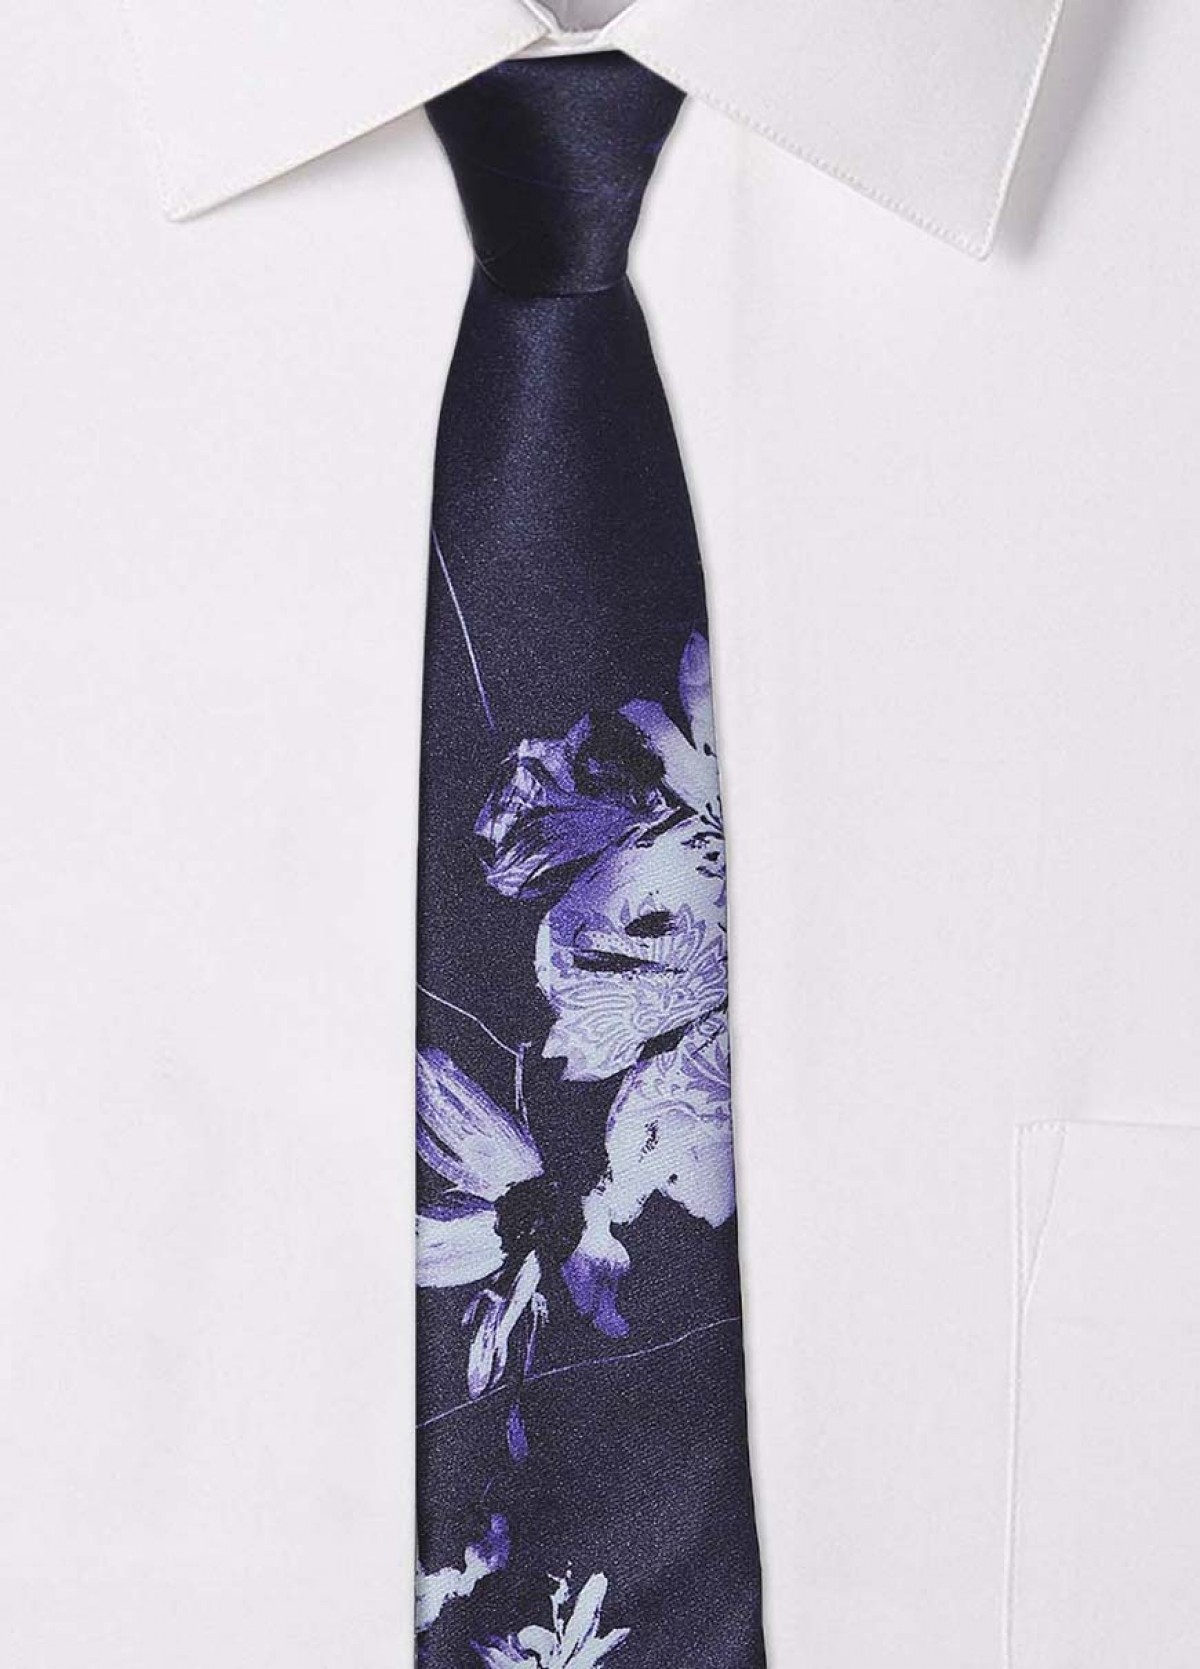 The Royal Blue Signature Tie